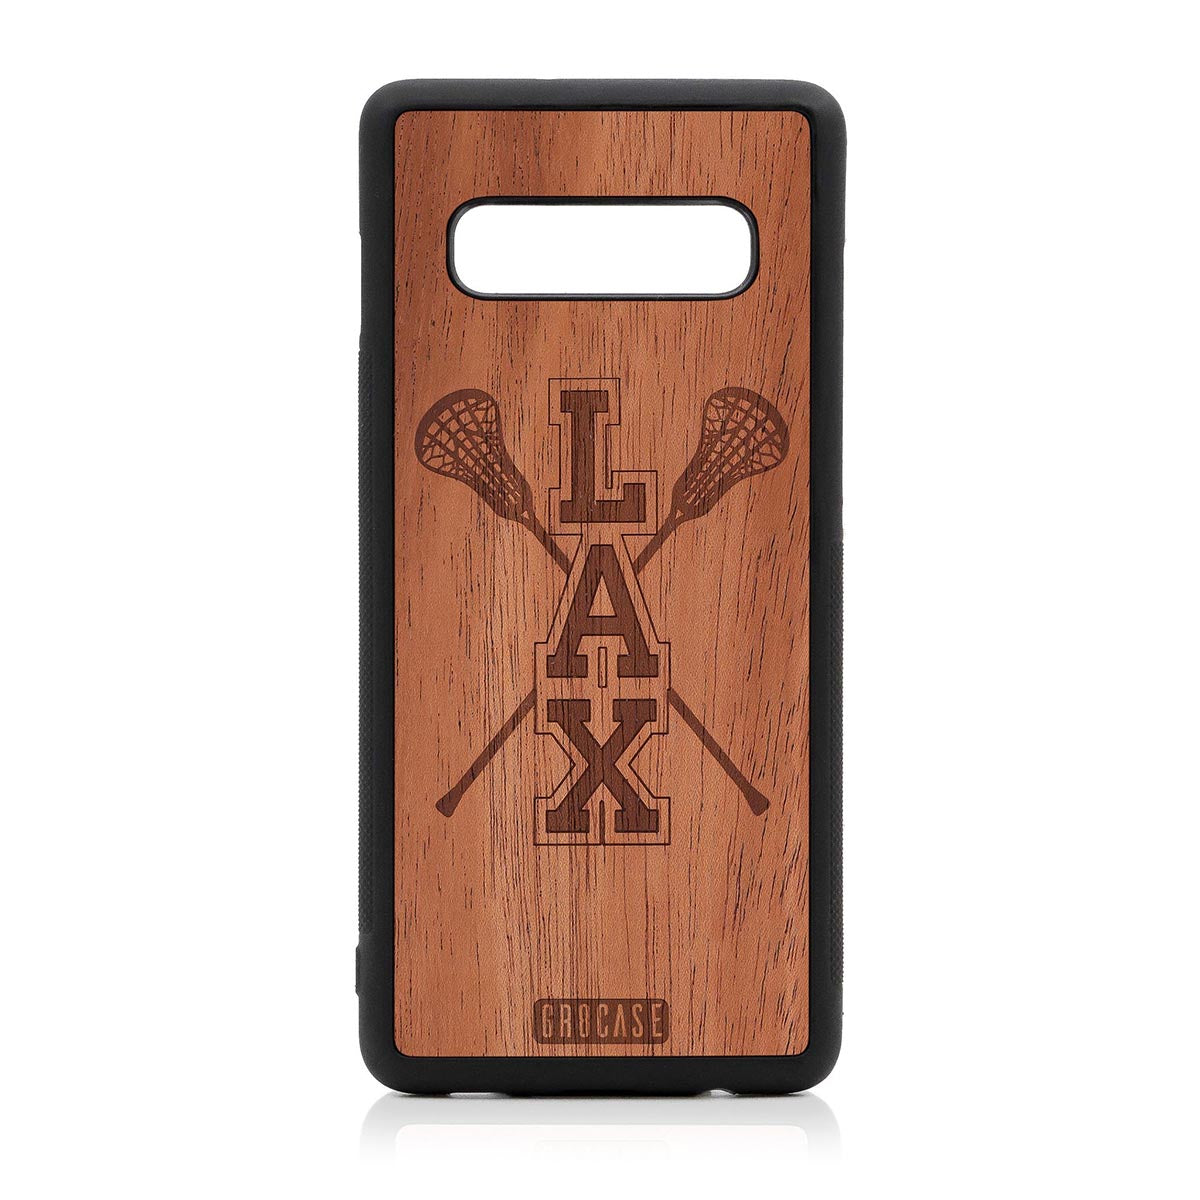 Lacrosse (LAX) Sticks Design Wood Case Samsung Galaxy S10 Plus by GR8CASE